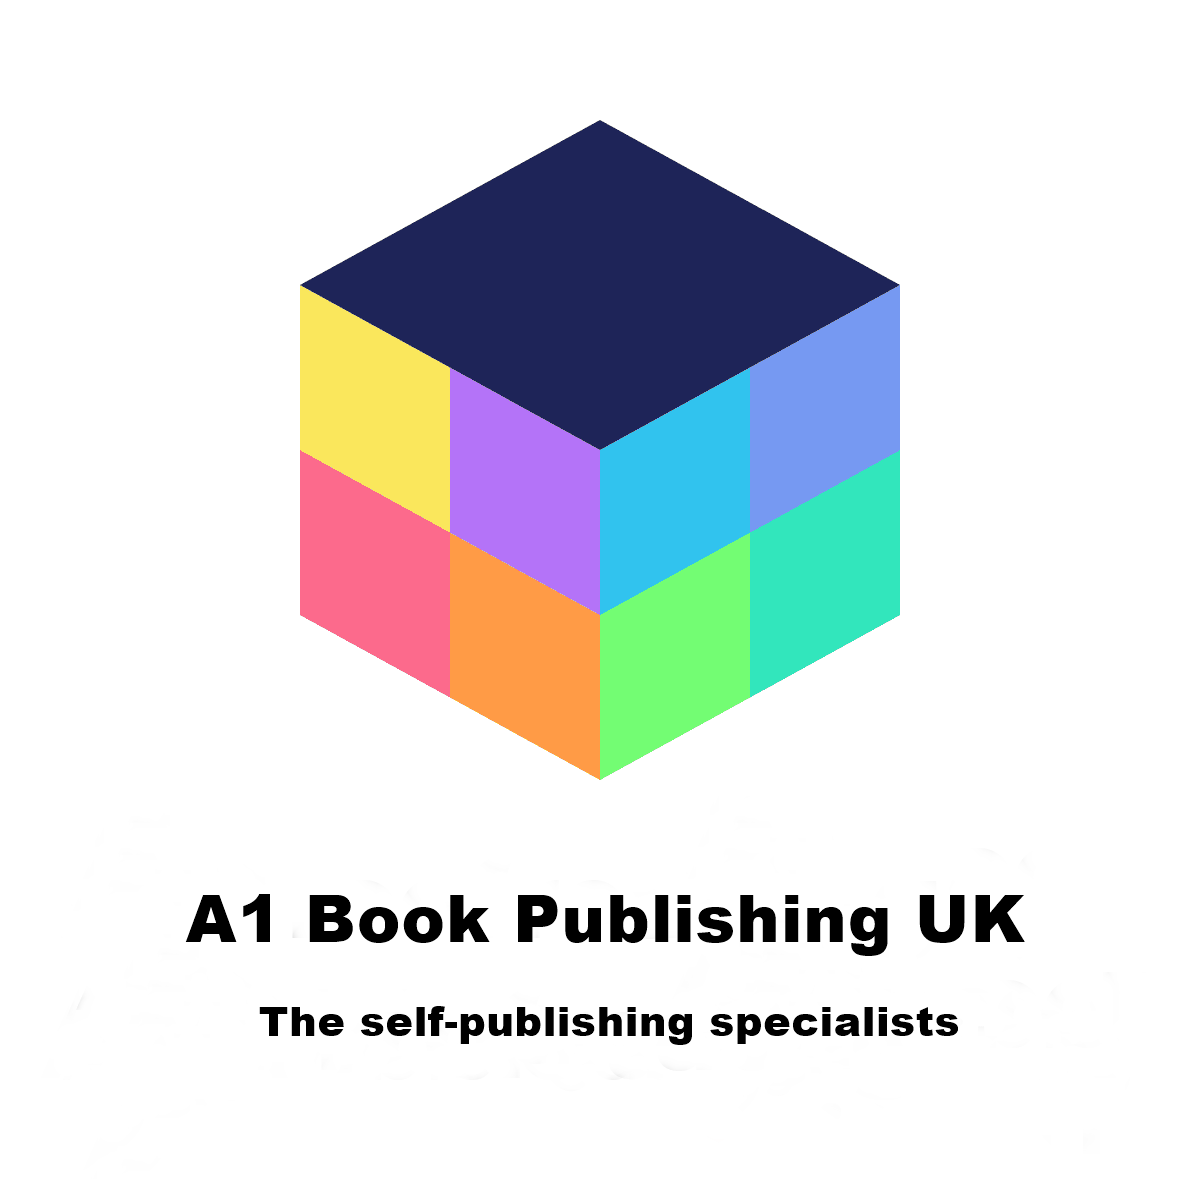 A1 Book Publishing UK